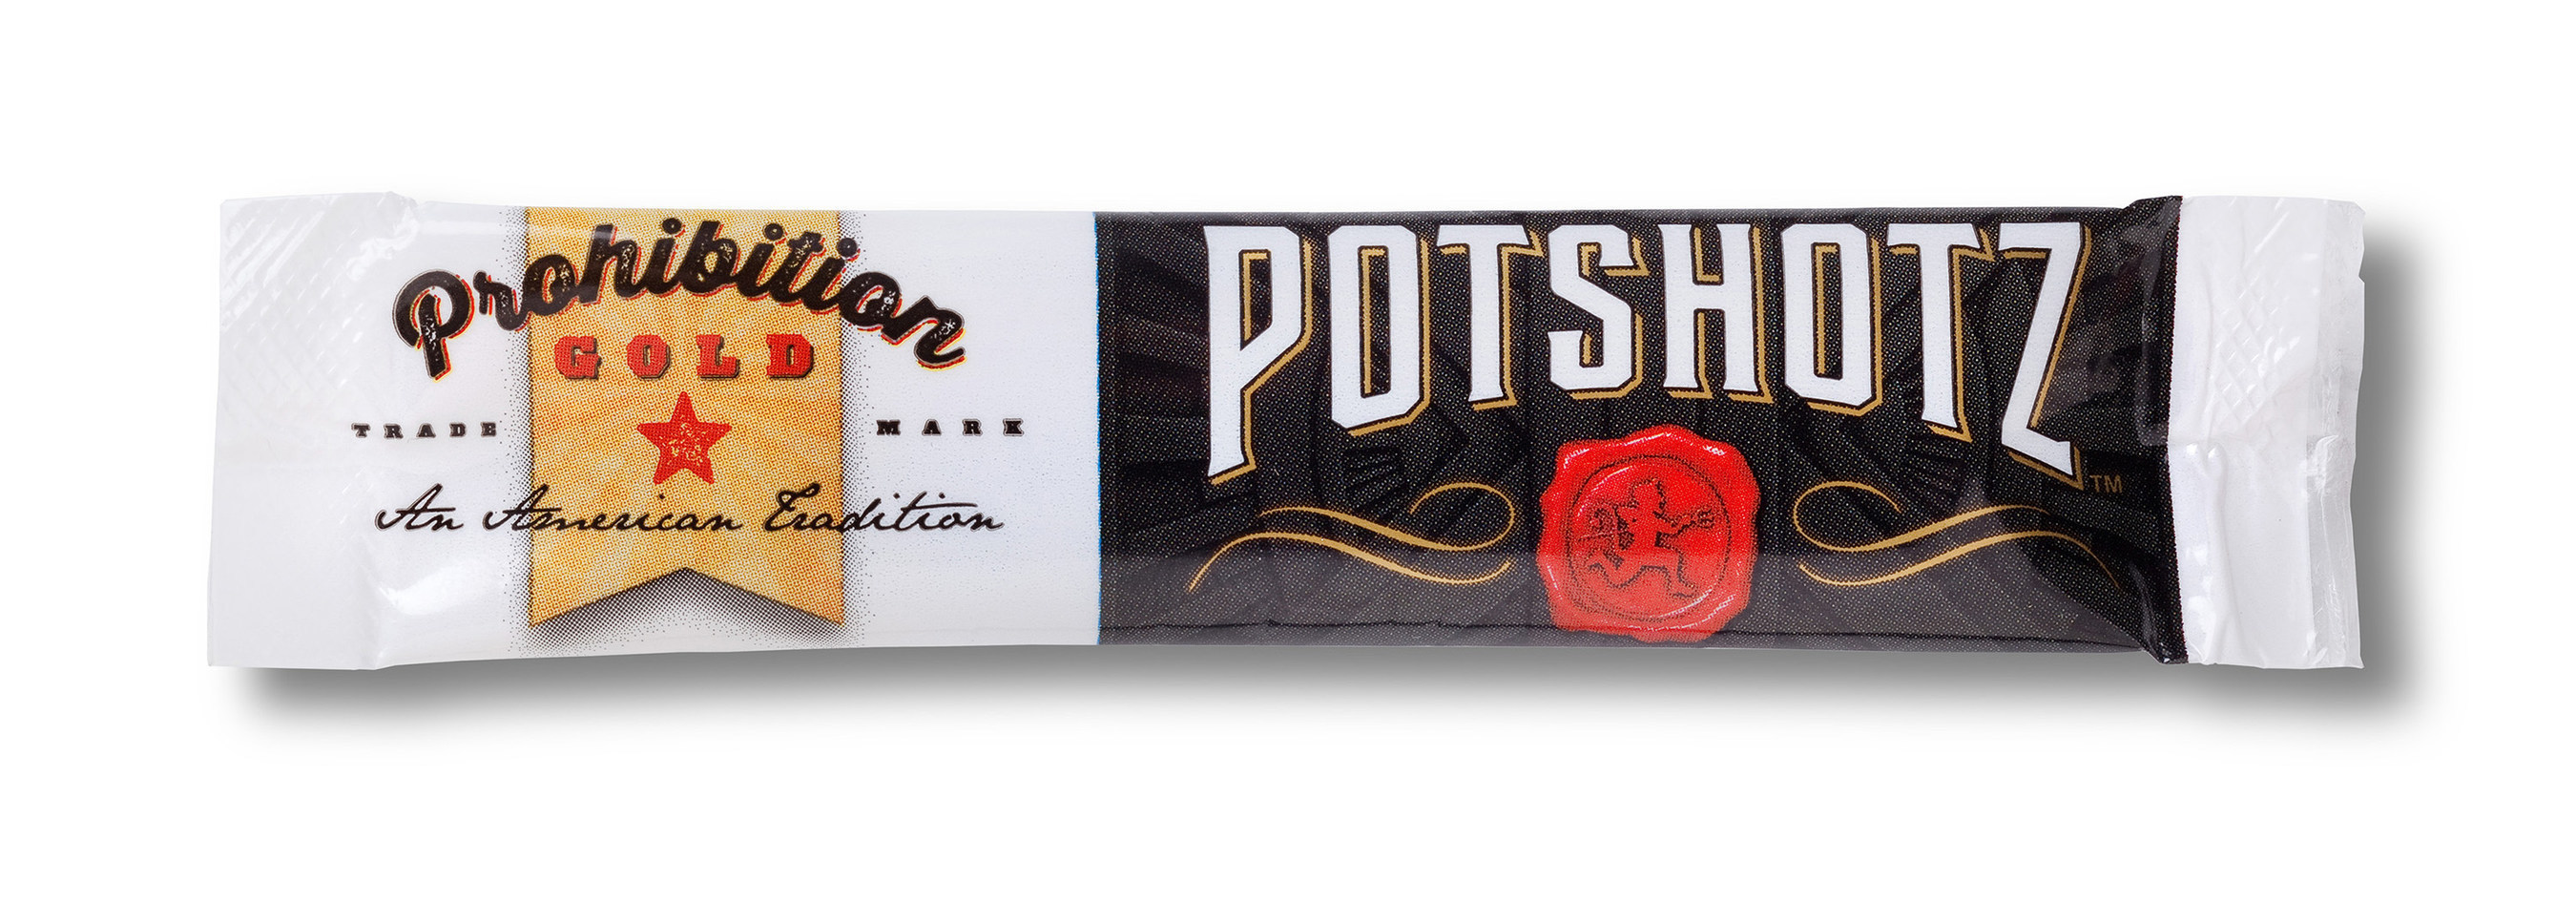 Prohibition Gold's Potshotz individual serving stick pack.